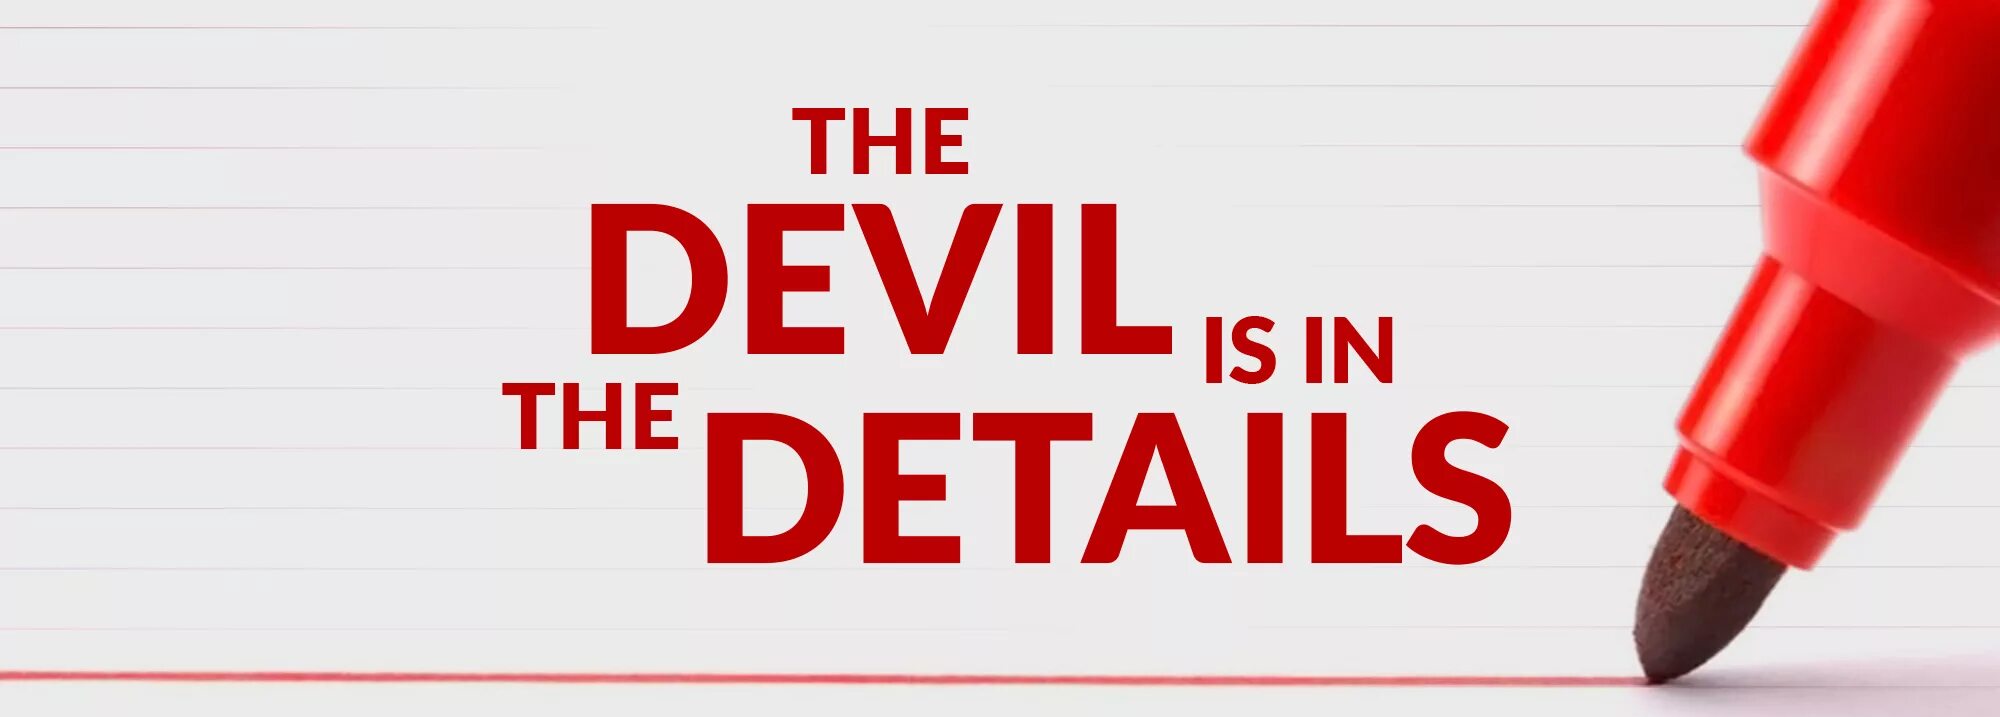 Devil is in the details. Devil's details. Detail надпись. Due diligence логотип. Devil in the details